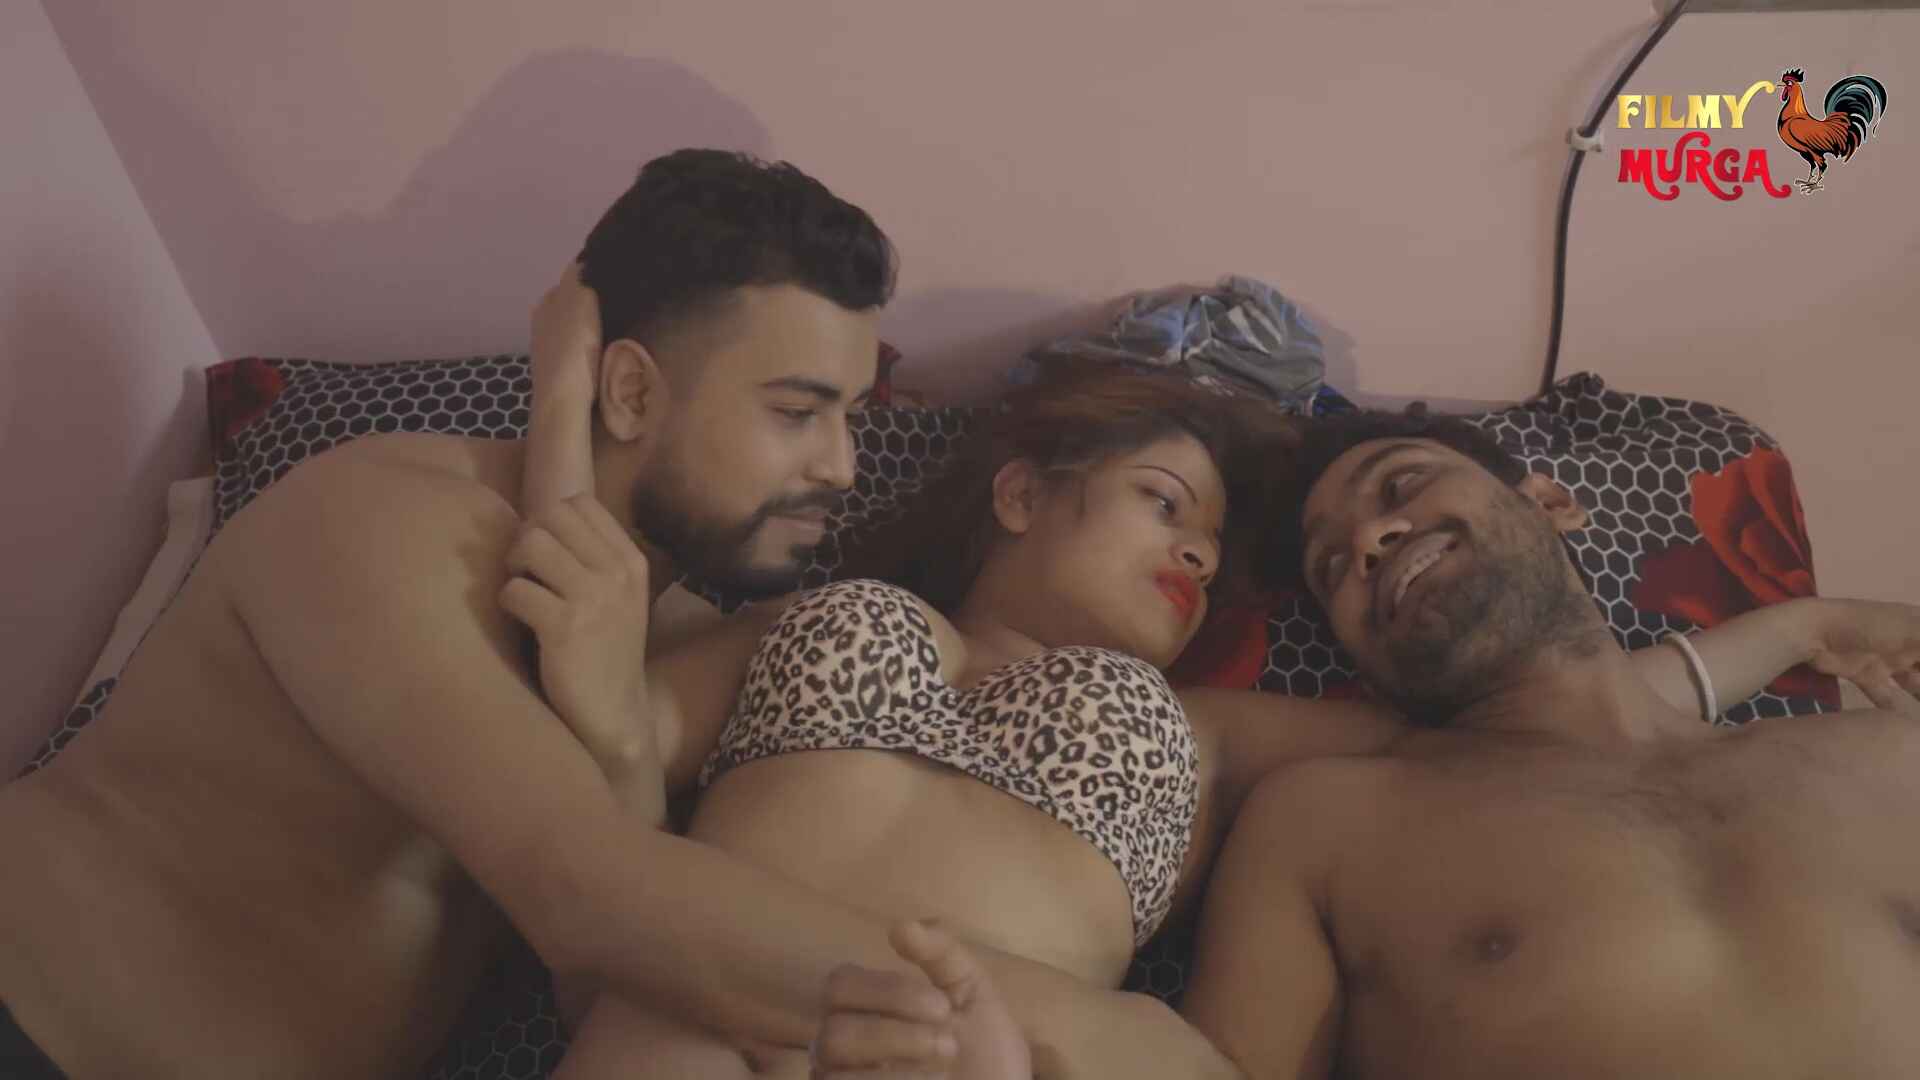 Murga Com - beiman dost filmy murga hindi adult hot film Free Porn Video WoWuncut.com